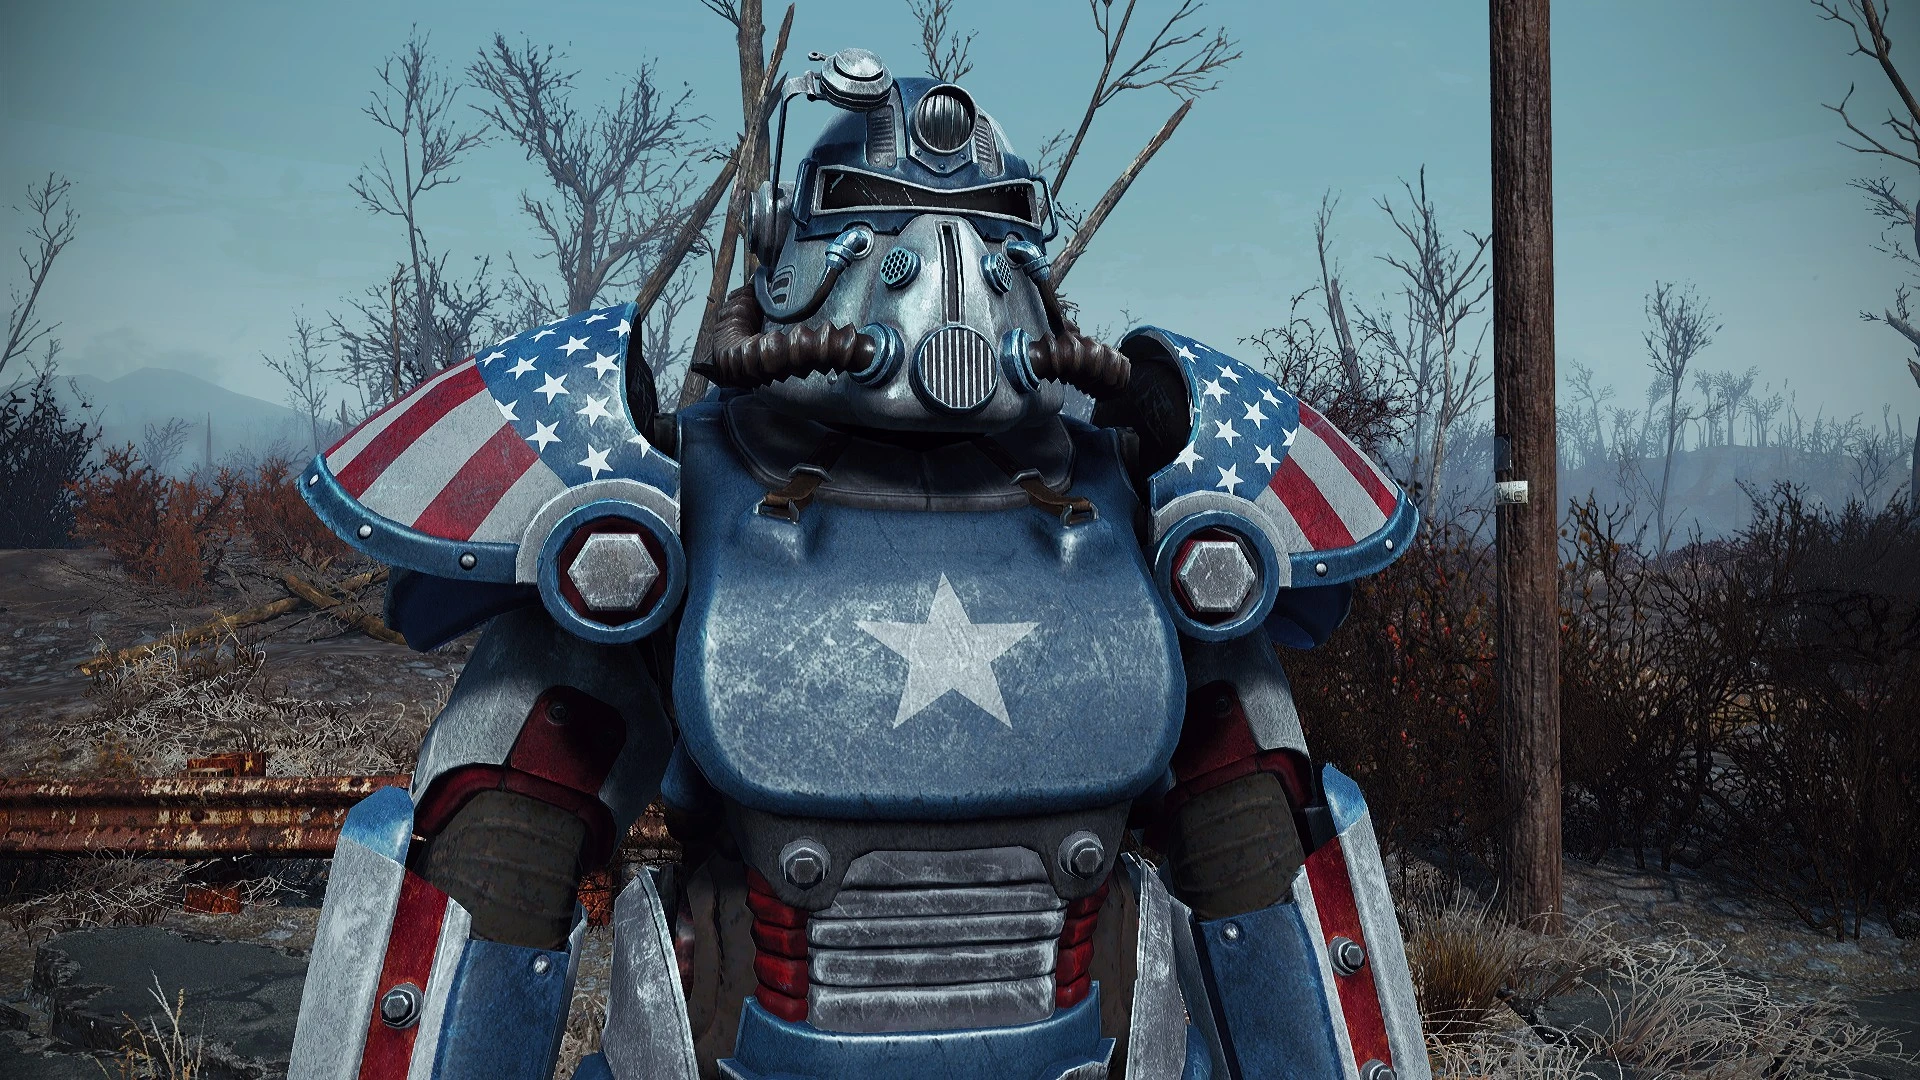 fallout 4 institute power armor mod